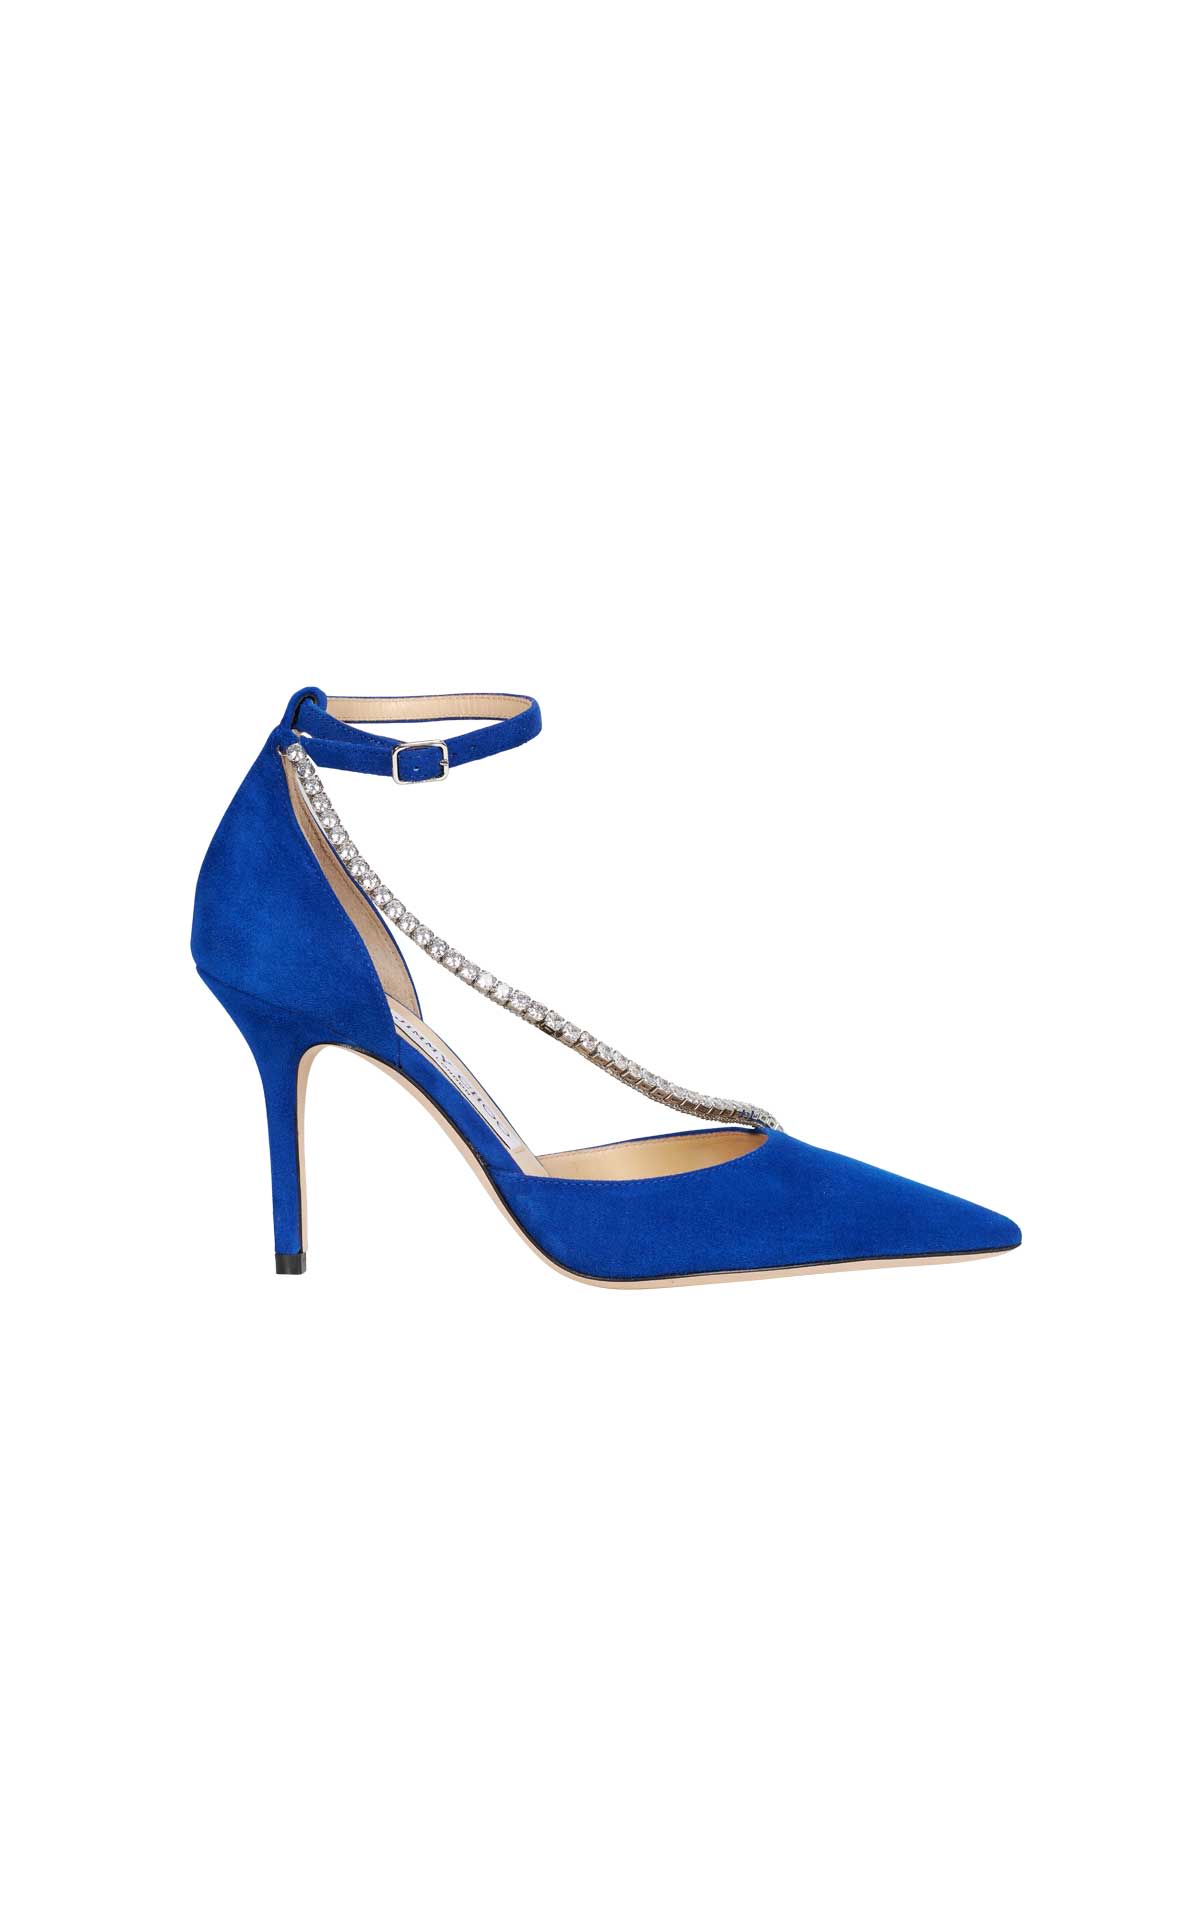 Blue stiletto heeled shoe Jimmy Choo